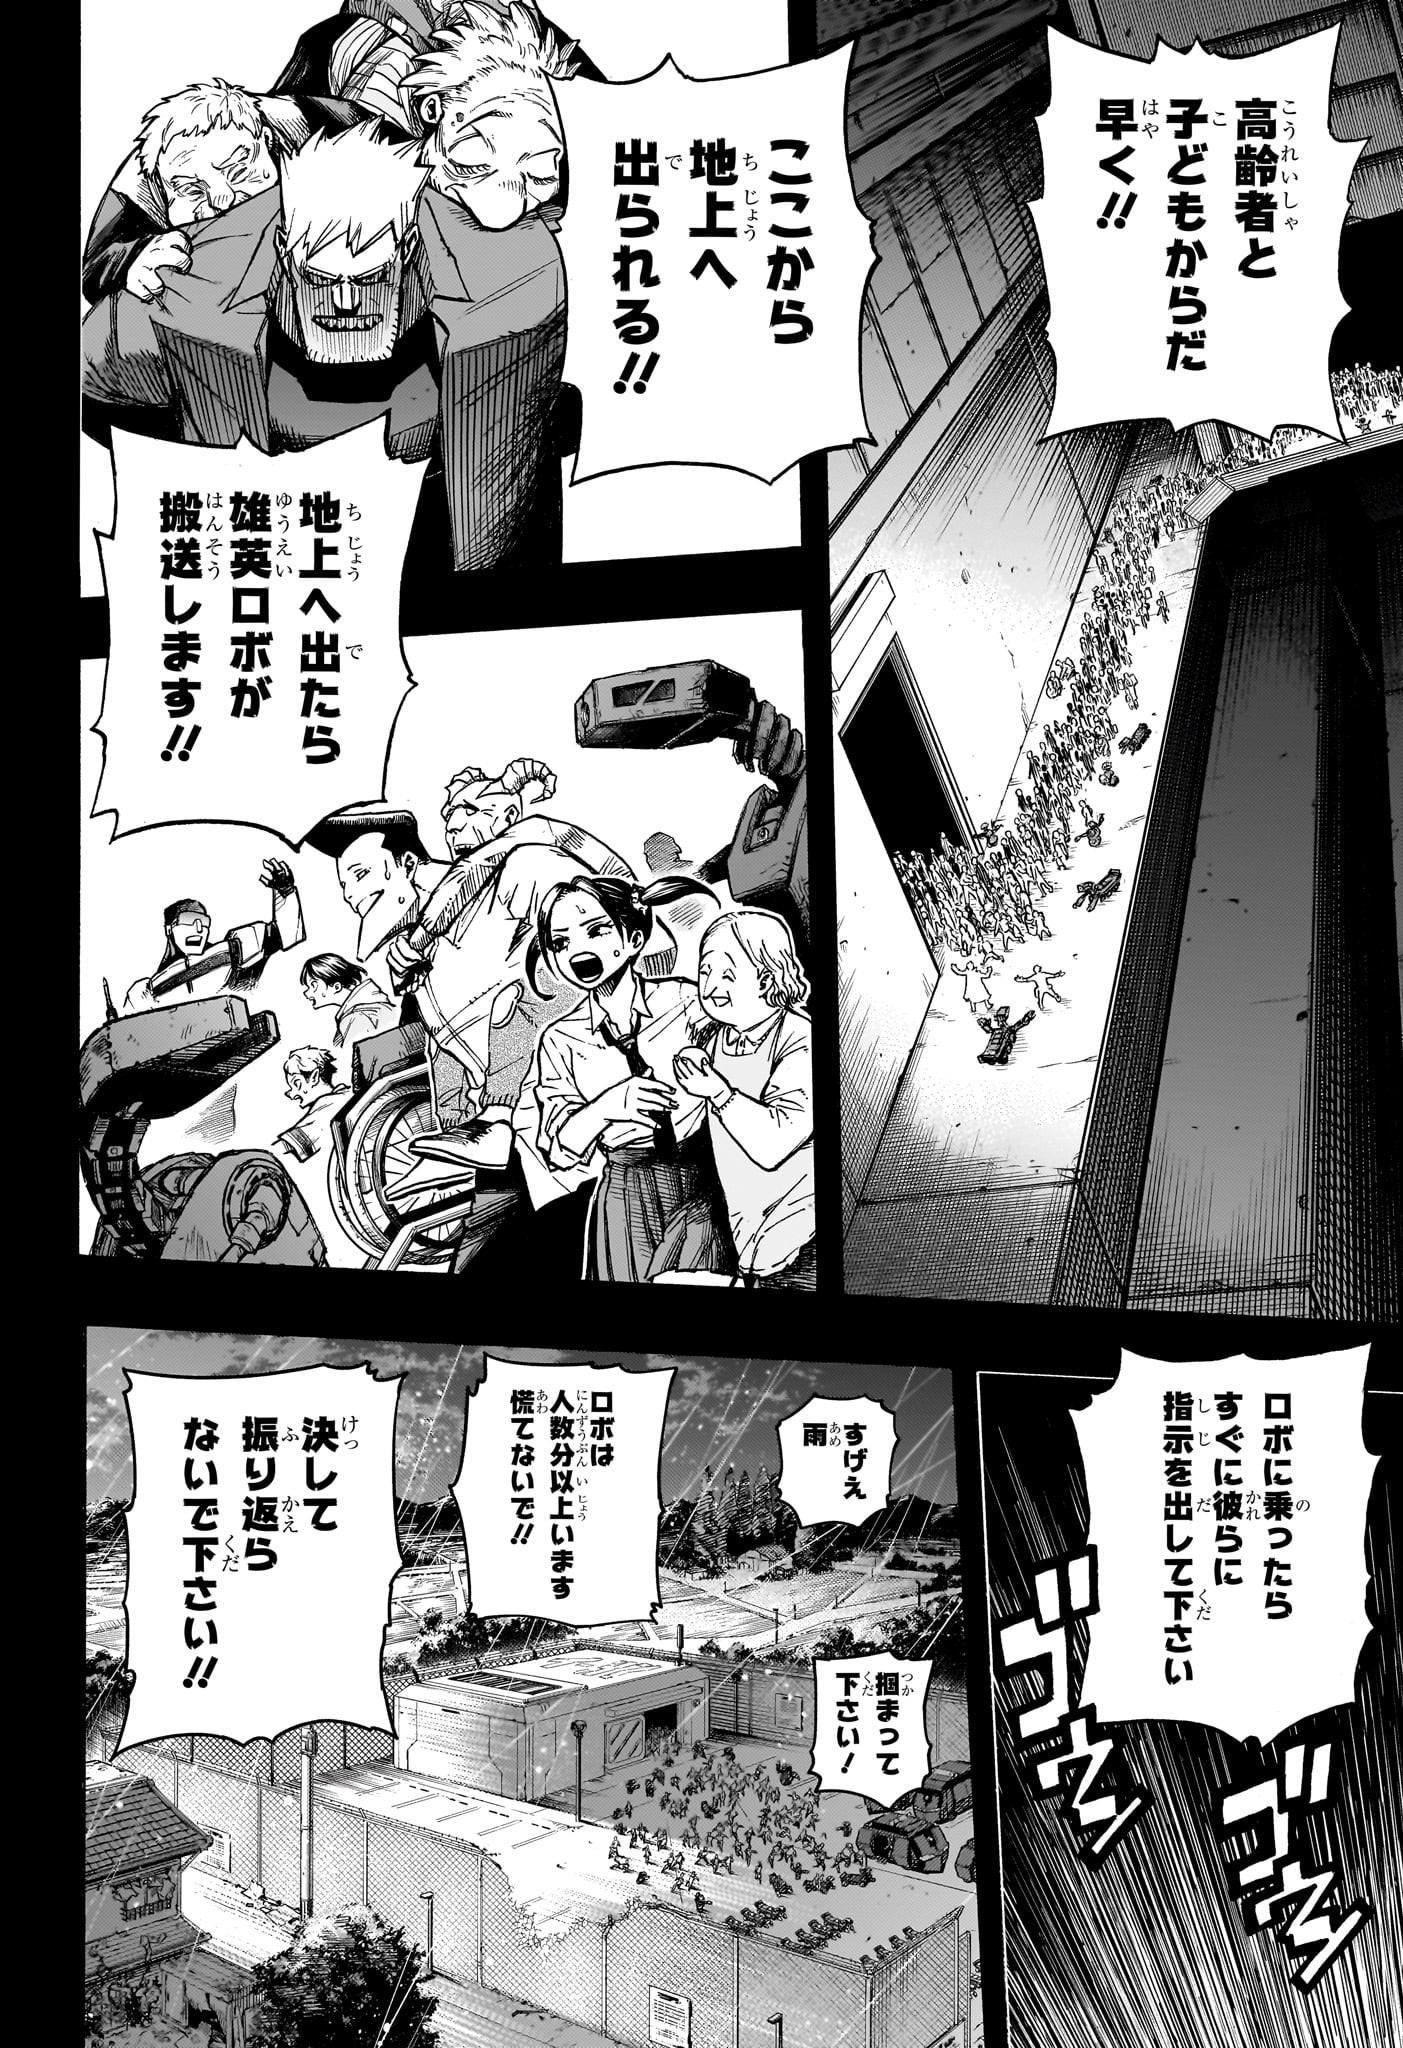 Boku no Hero Academia - Chapter 388 - Page 2